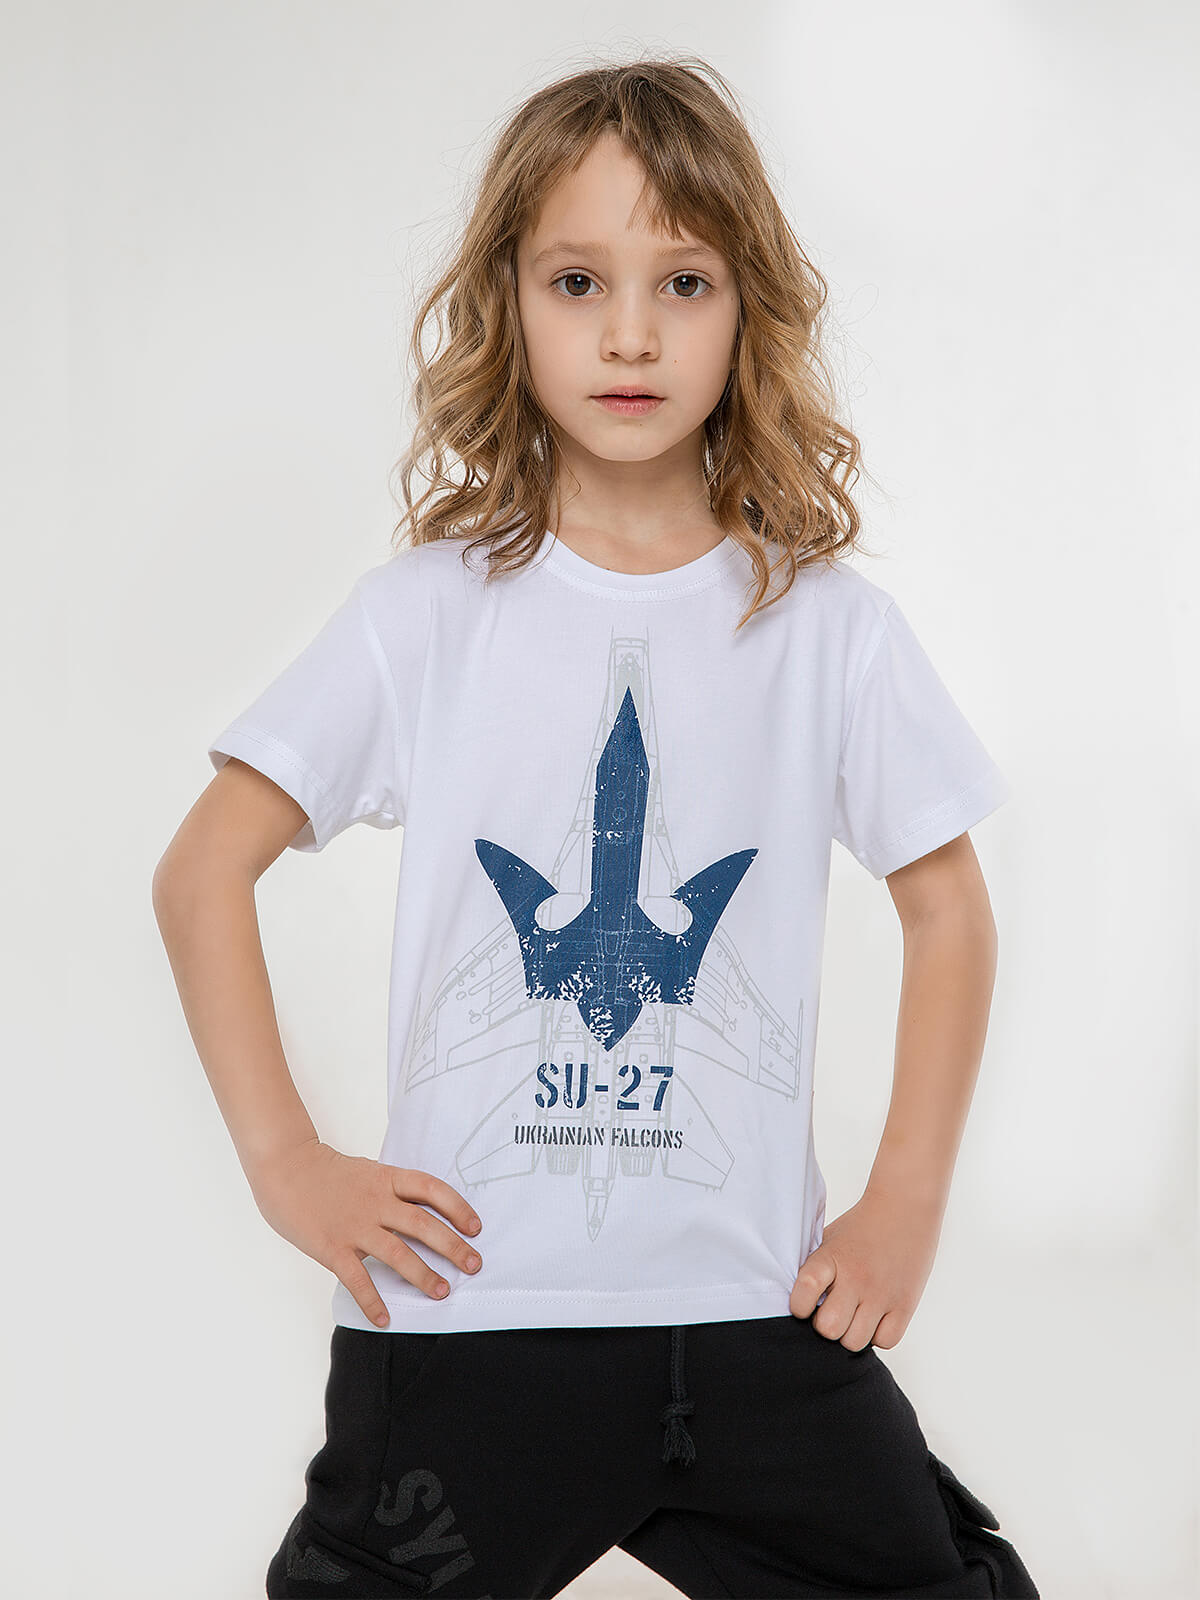 Kids T-Shirt Su-27. Color white. .